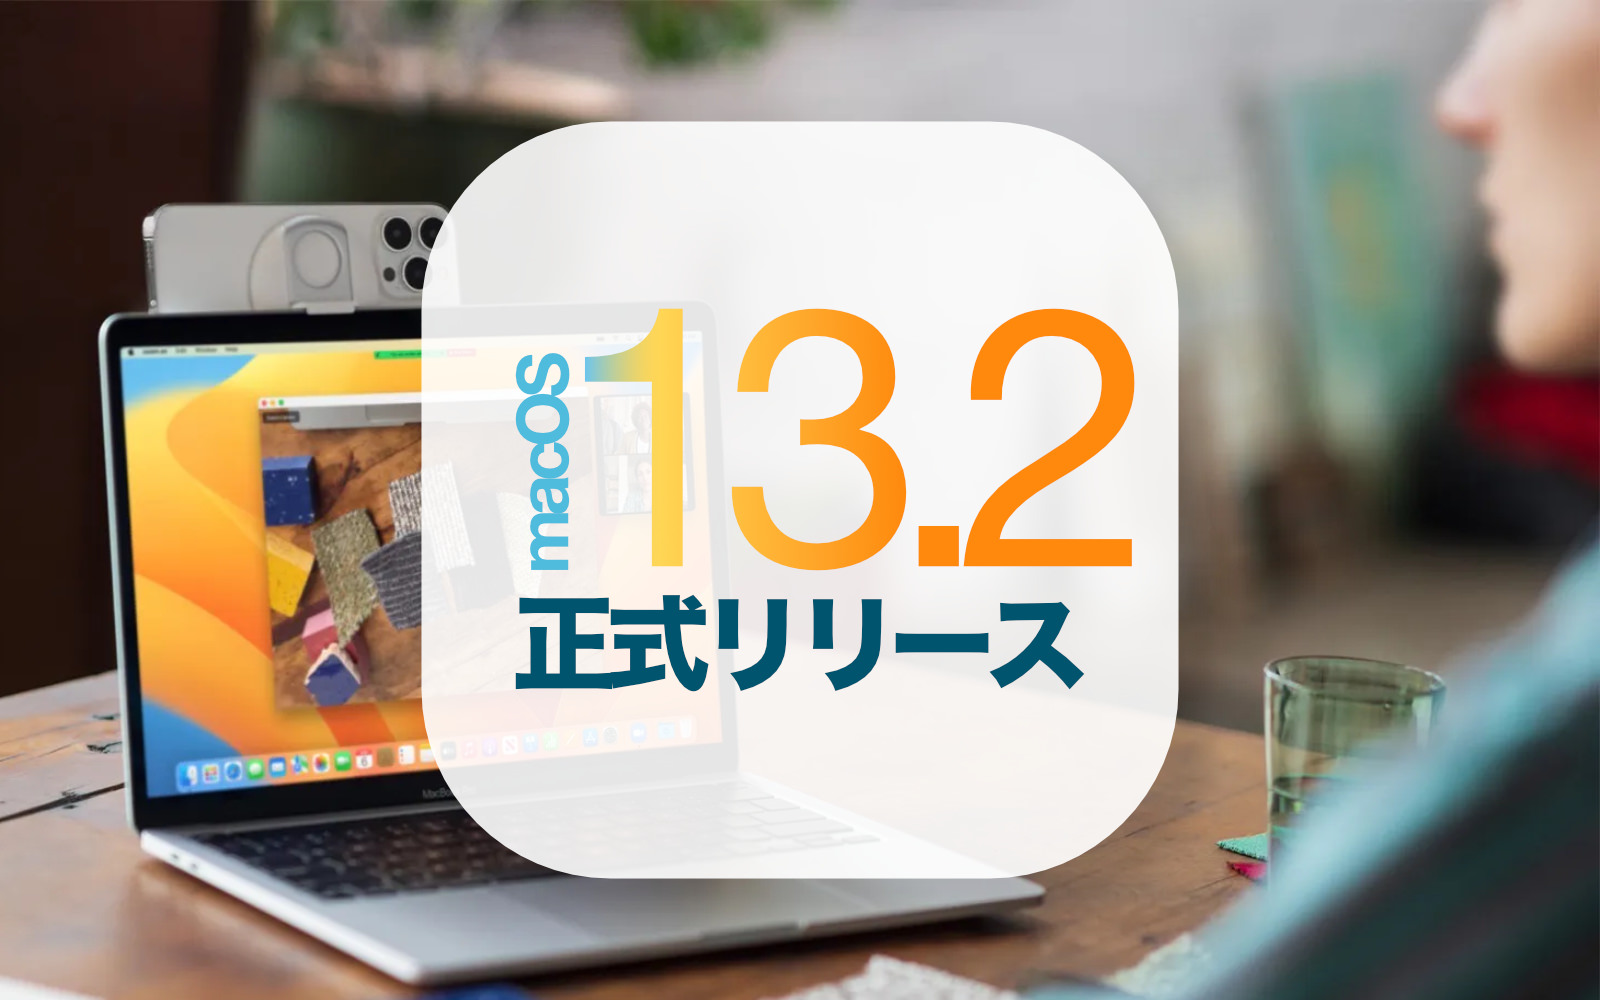 MacOS13 Ventura 13 2 official release